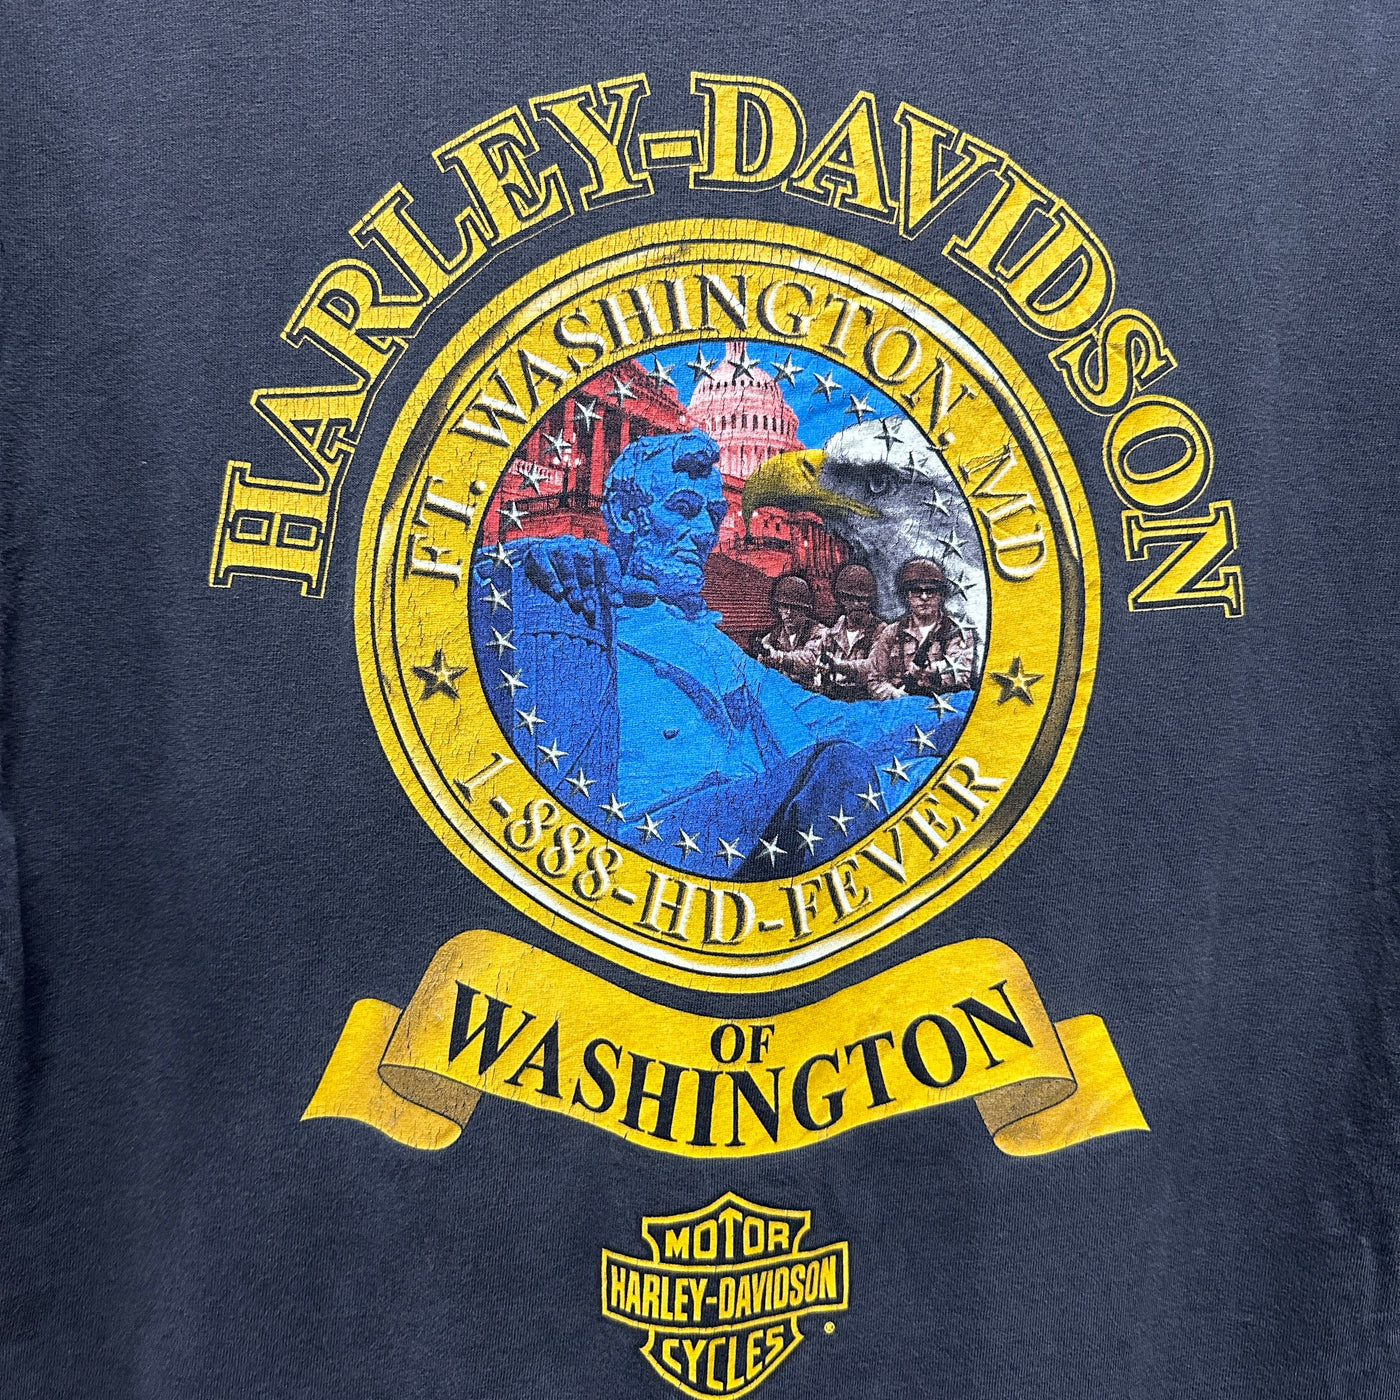 90's Flaming Wolf & Eagle Black Harley Davidson T-shirt sz L